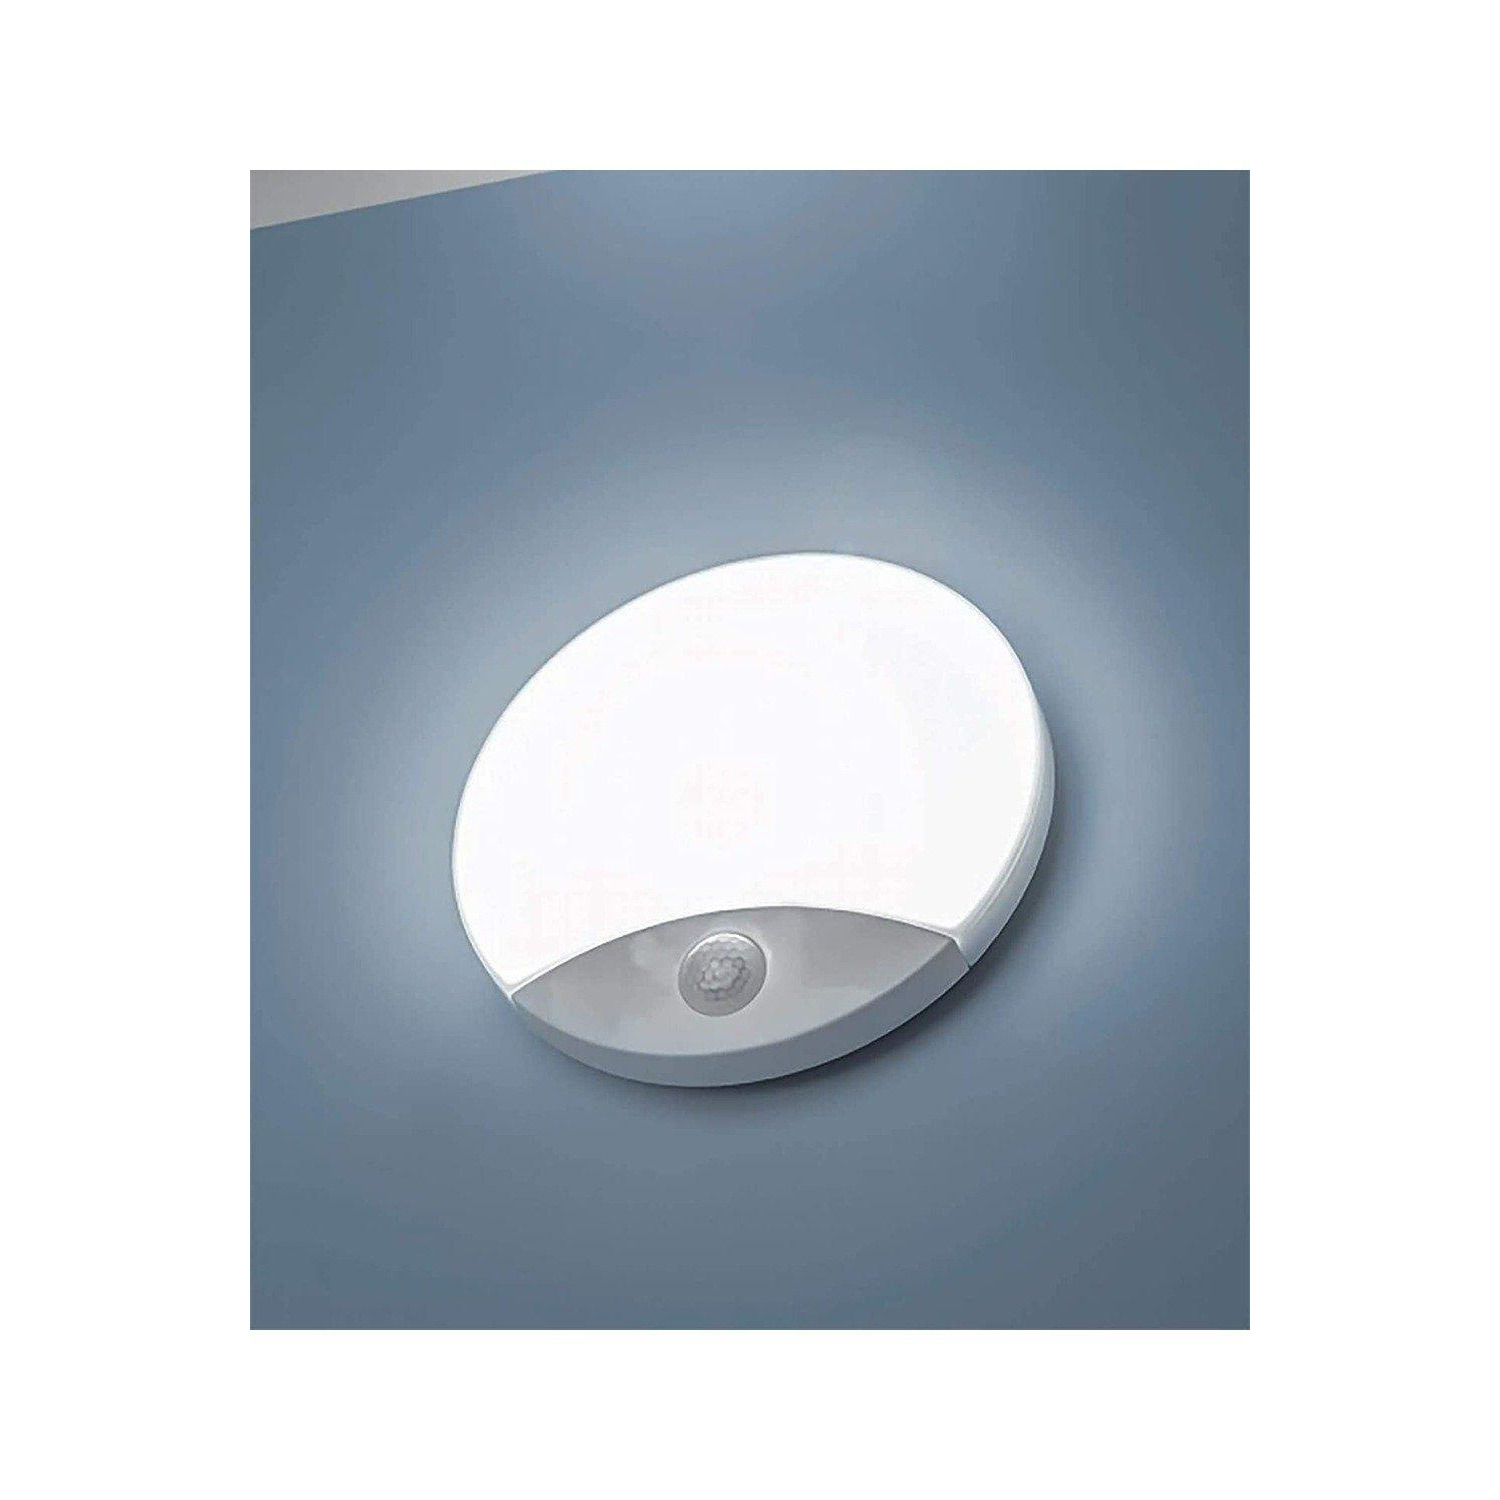 'Logan' Round LED Ceiling Light With PIR Motion Sensor - image 1